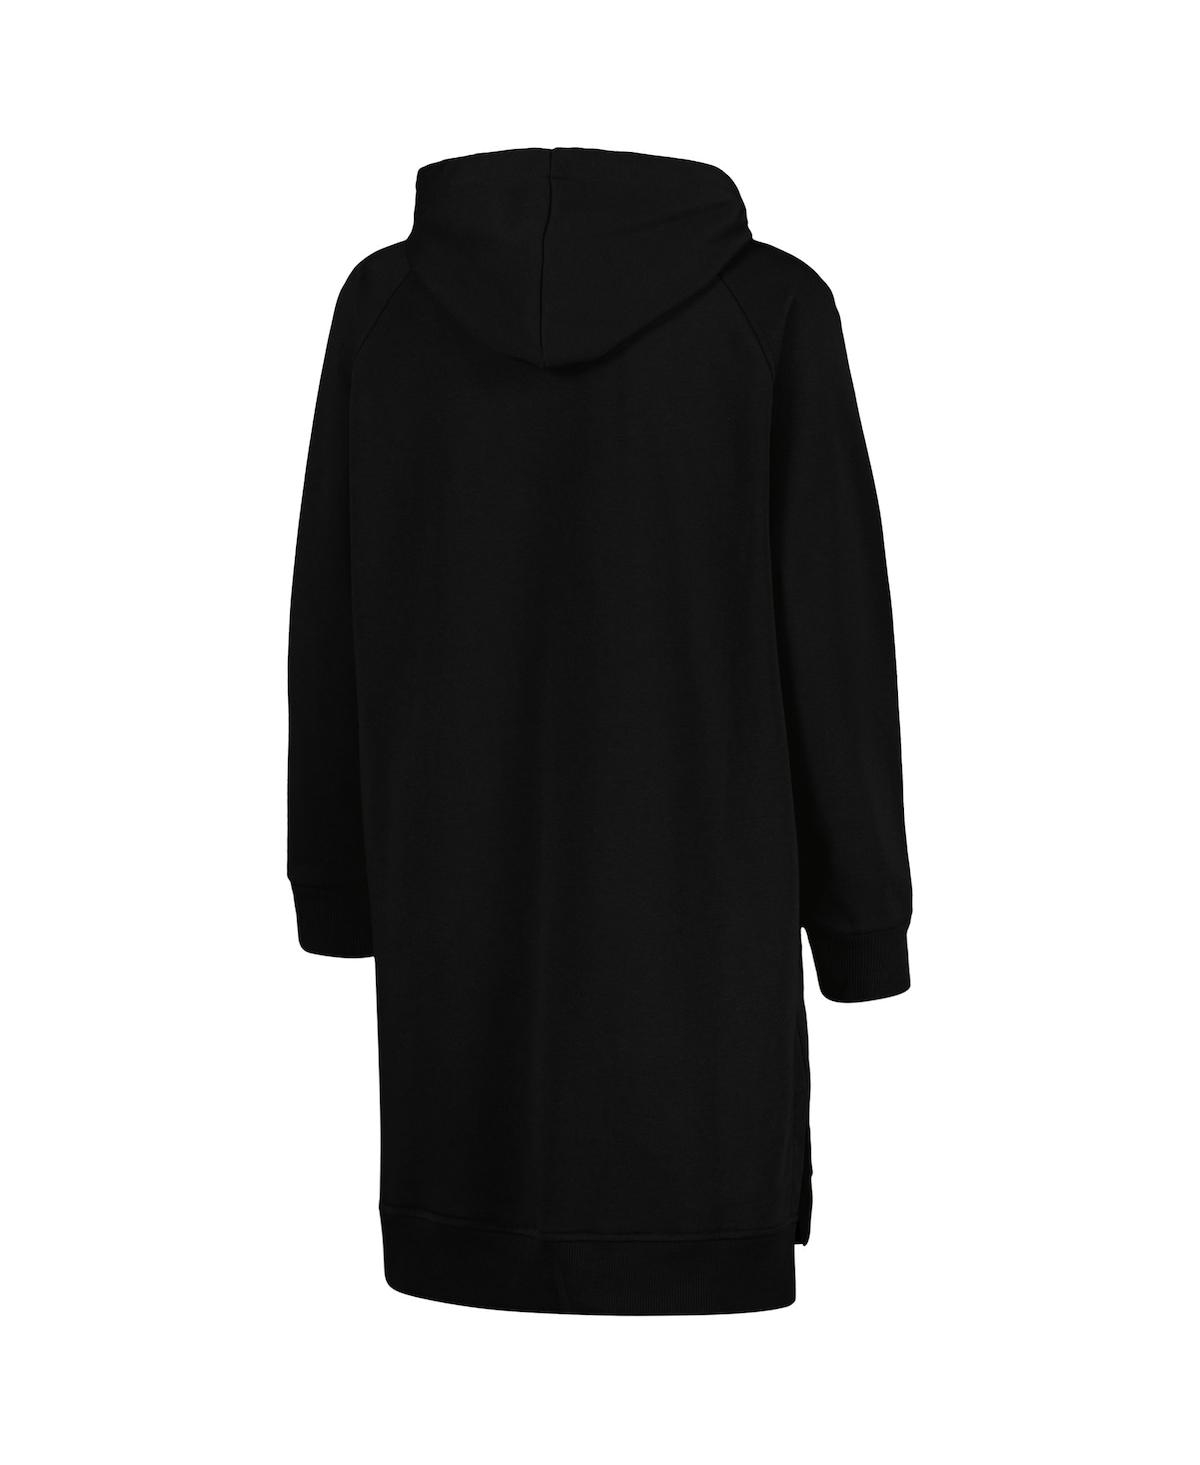 Shop Gameday Couture Women's  Black Ohio State Buckeyes Take A Knee Raglan Hooded Sweatshirt Dress